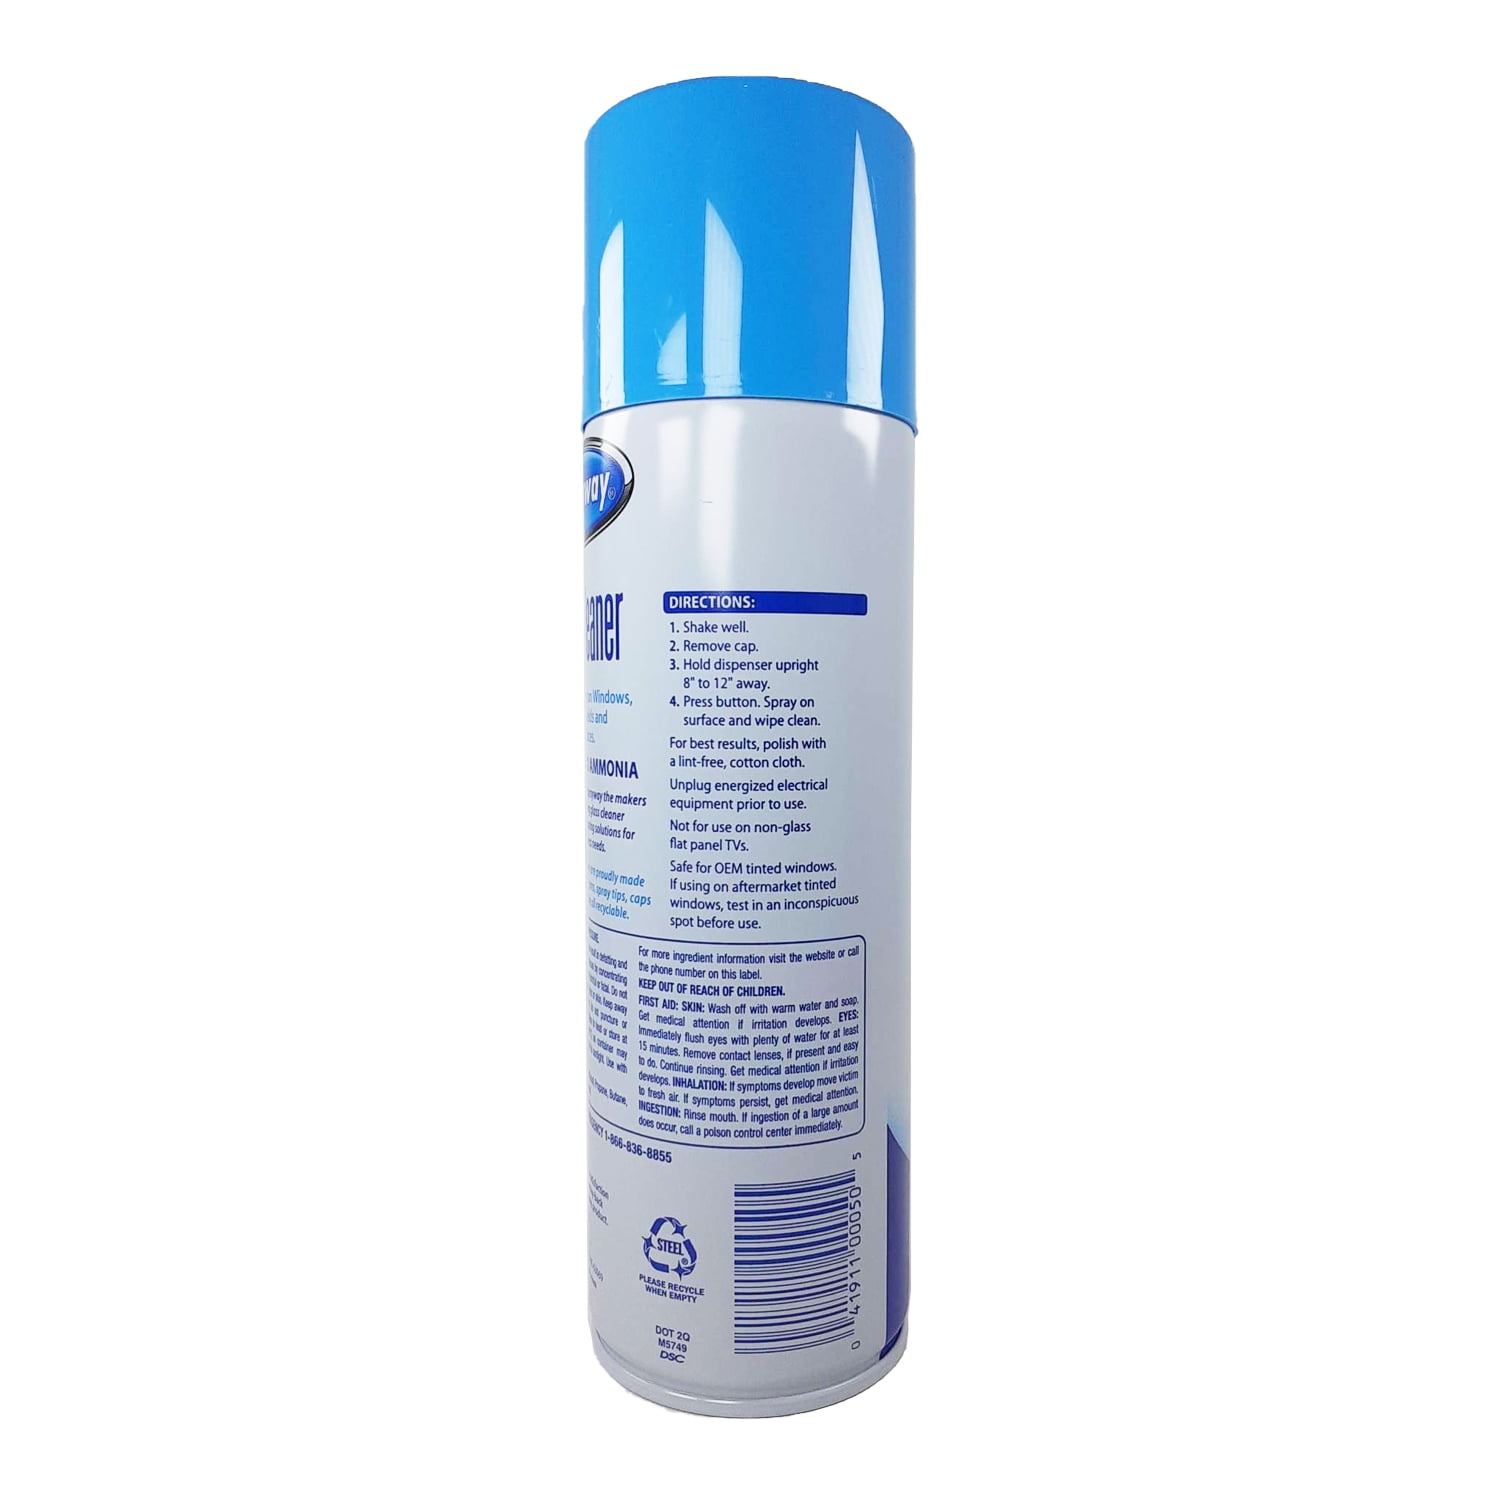 Sprayway Glass Cleaner 4oz: Streak-Free Glass Cleaner Spray, 2-Packs